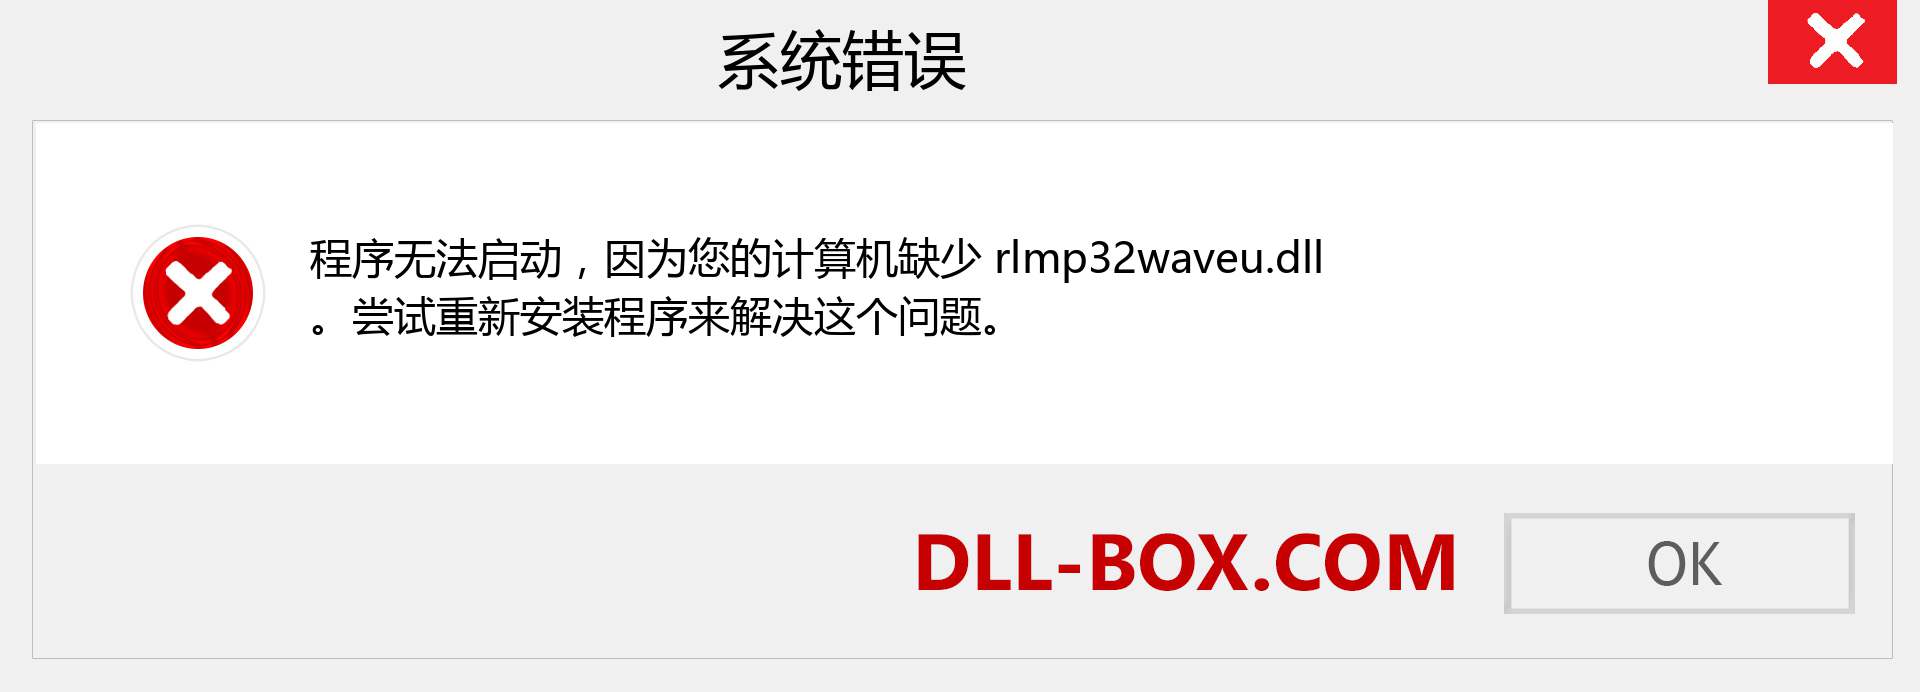 rlmp32waveu.dll 文件丢失？。 适用于 Windows 7、8、10 的下载 - 修复 Windows、照片、图像上的 rlmp32waveu dll 丢失错误